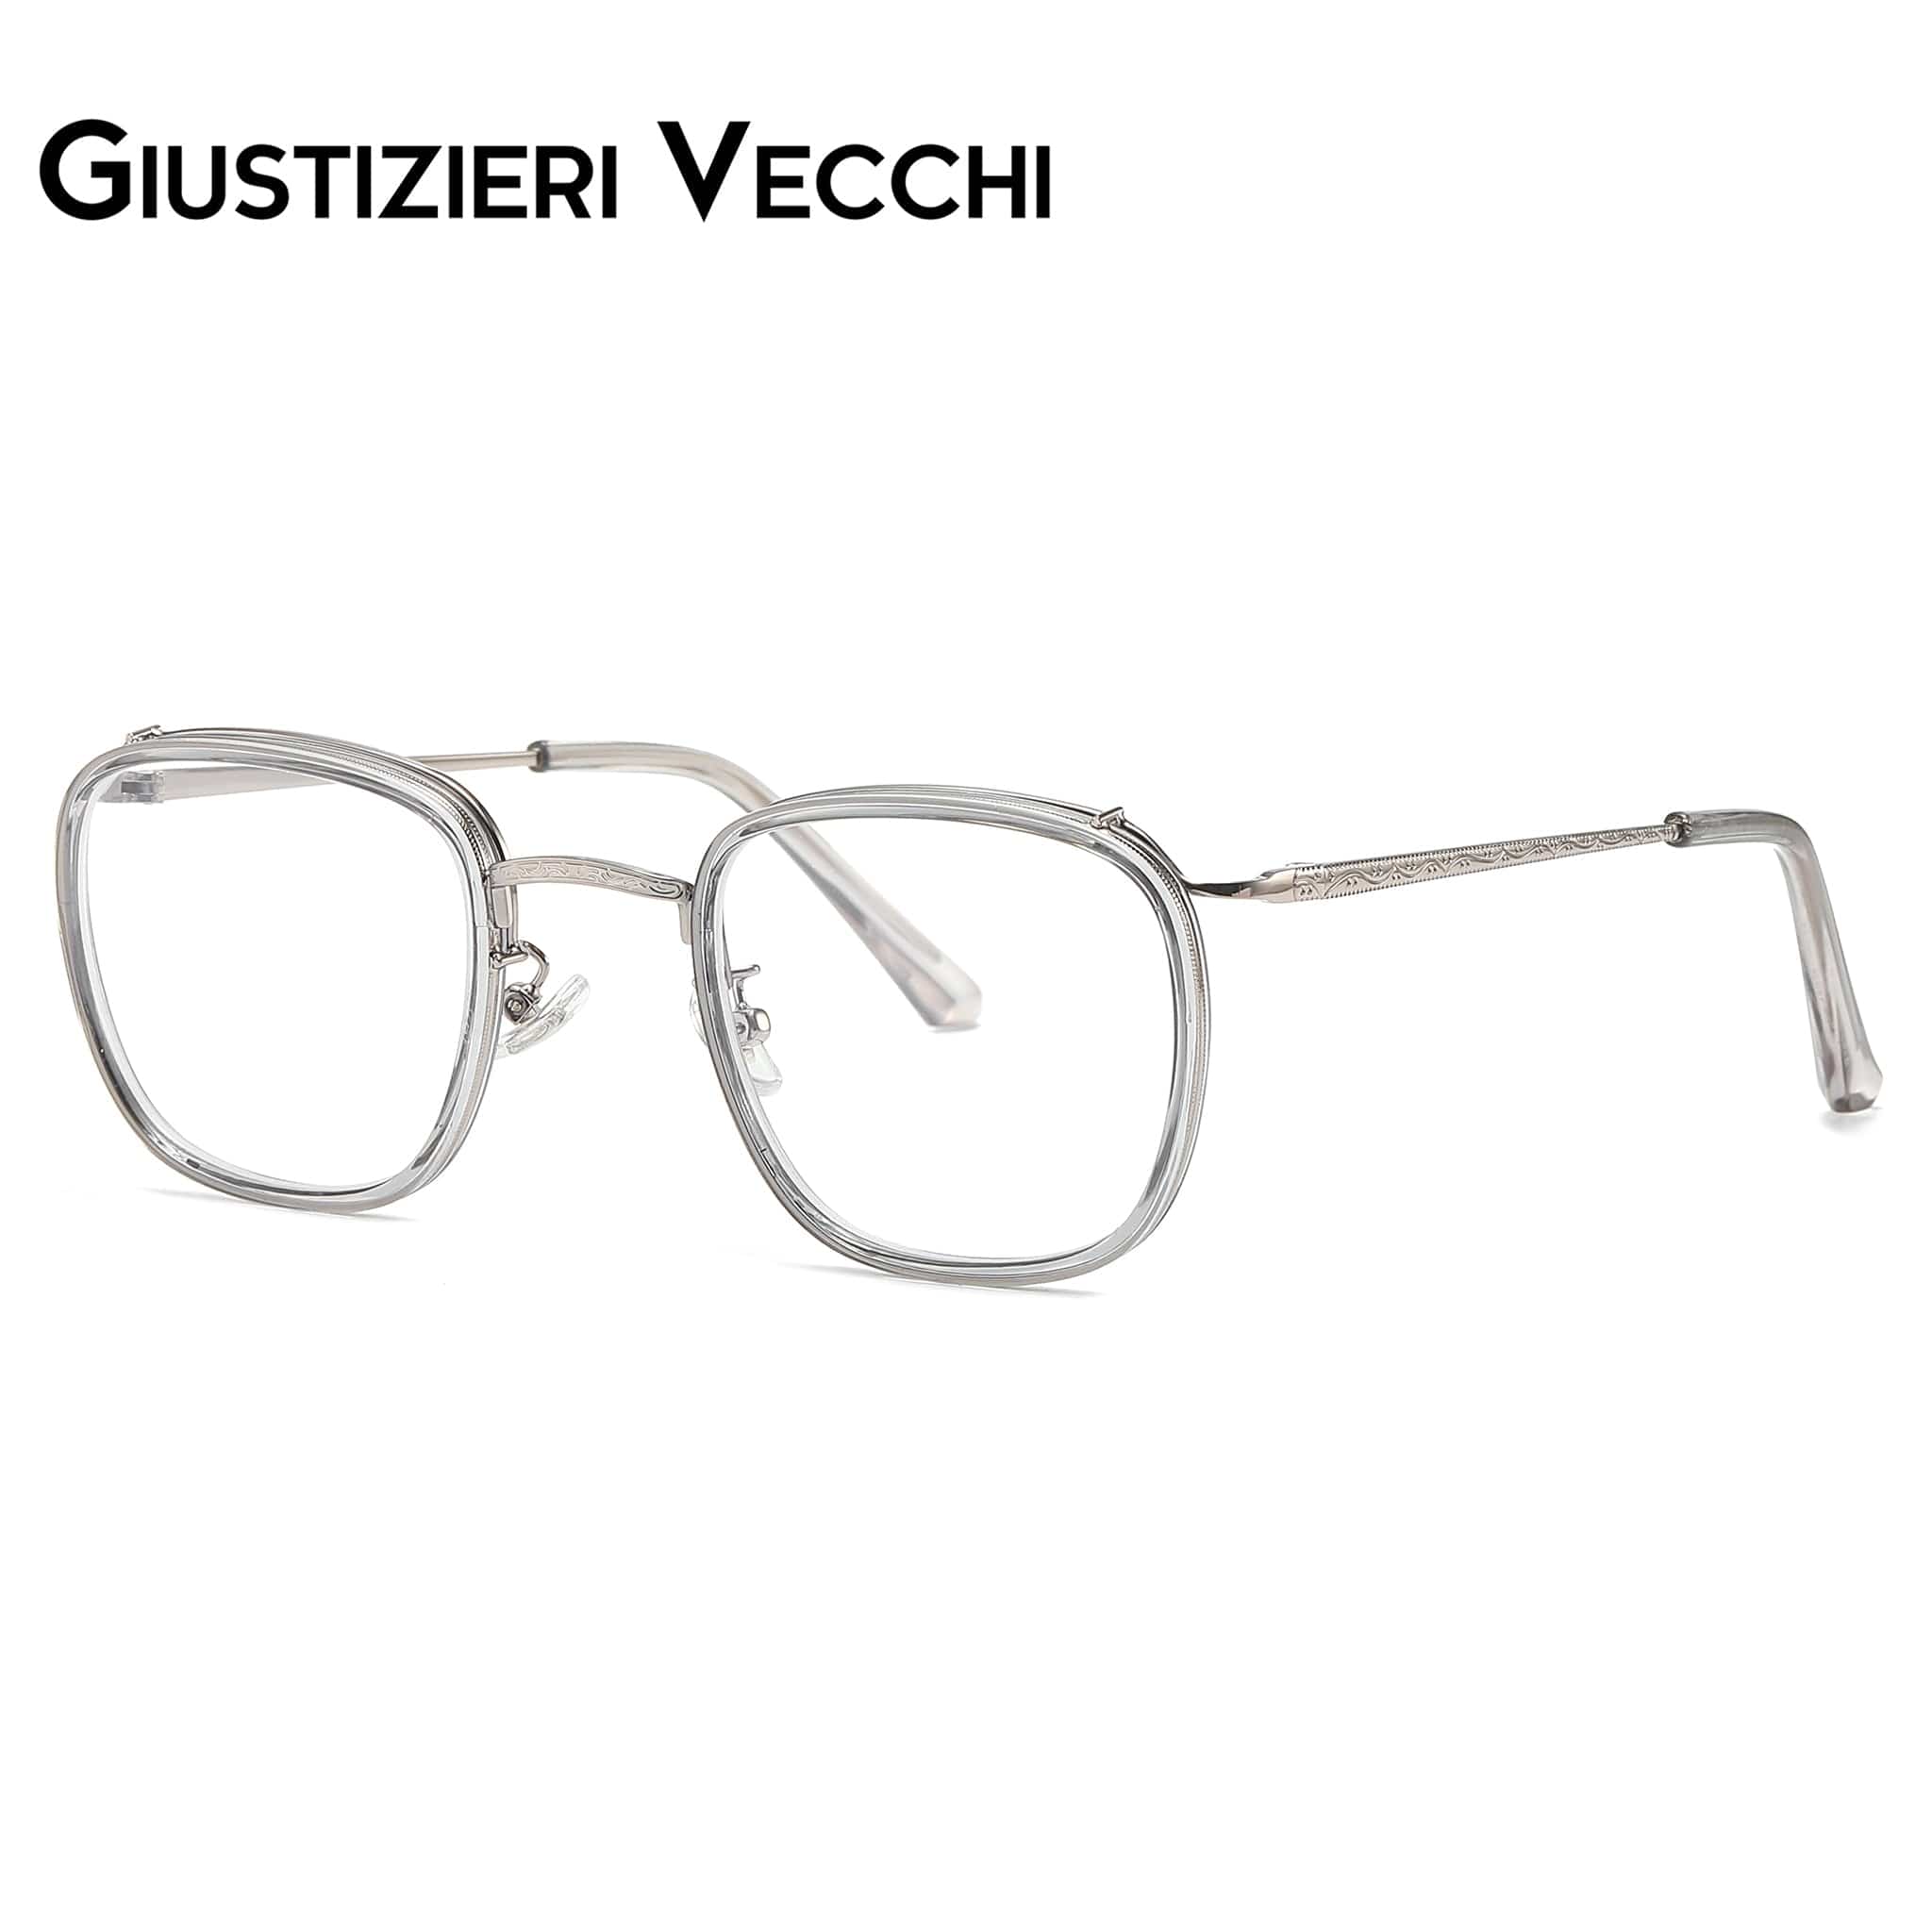 GIUSTIZIERI VECCHI Eyeglasses Small / Gunmetal Grey Starry Night Quattro